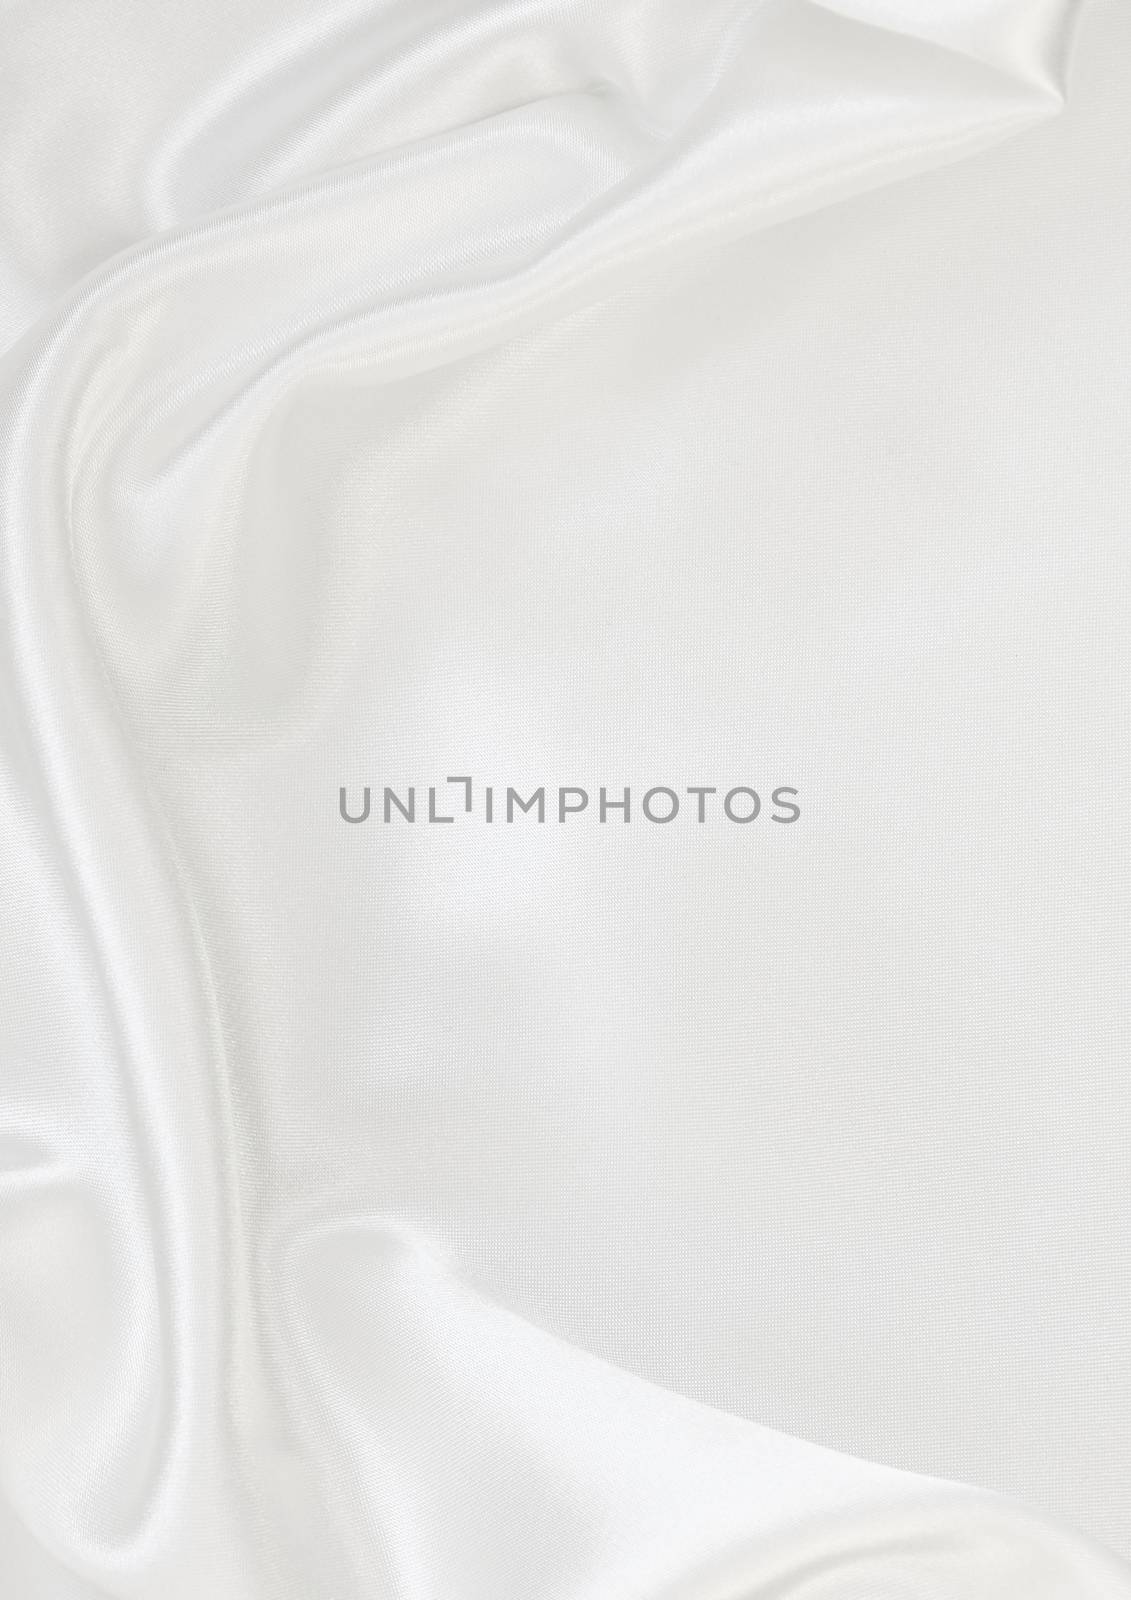 Smooth elegant white silk as wedding background by oxanatravel